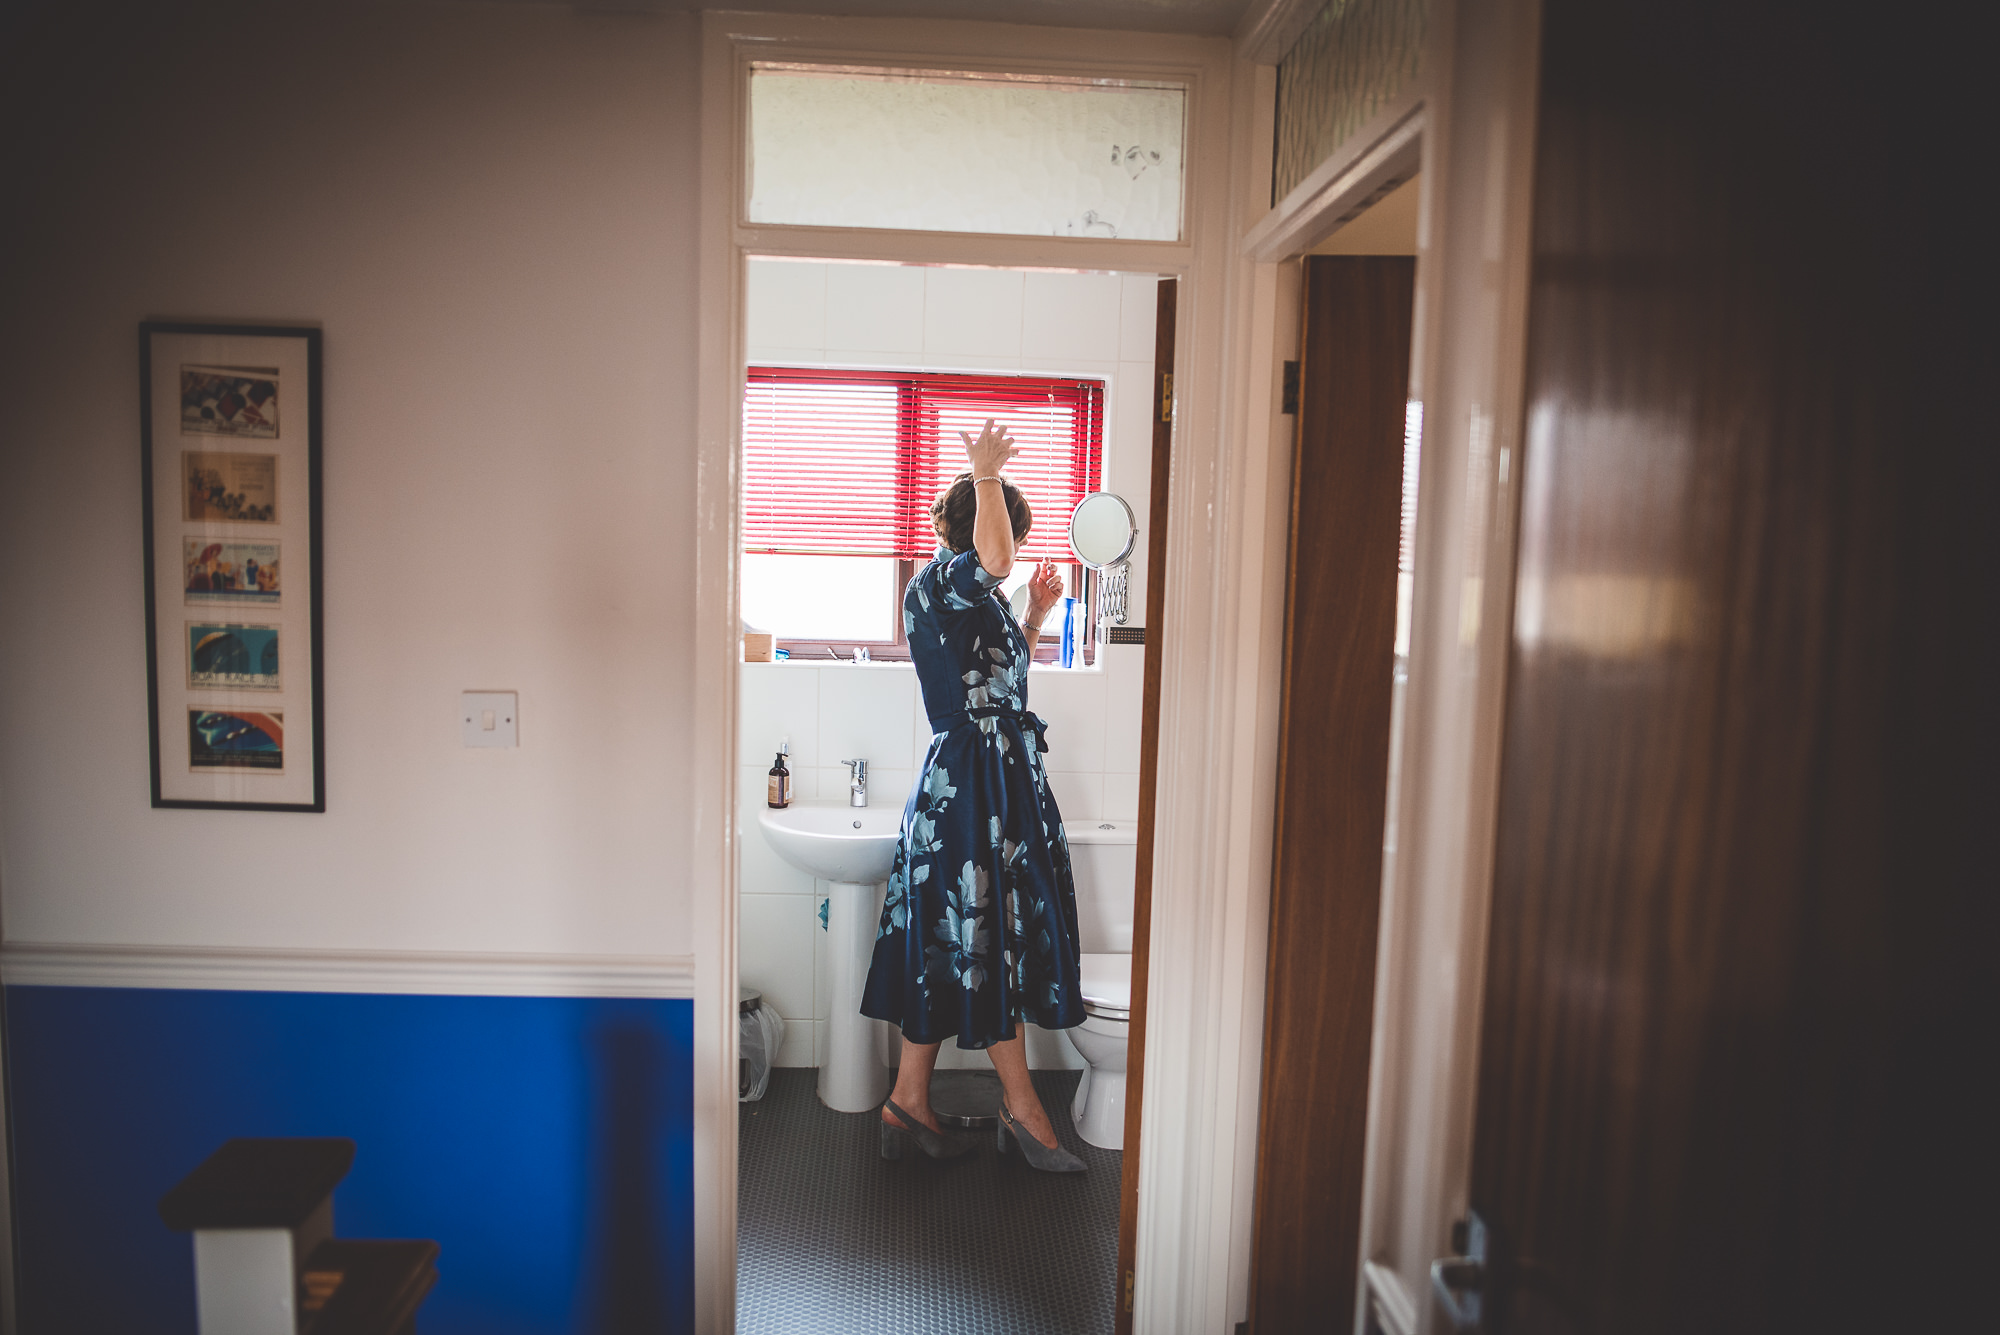 A bride in a dress standing in the doorway of a bathroom.